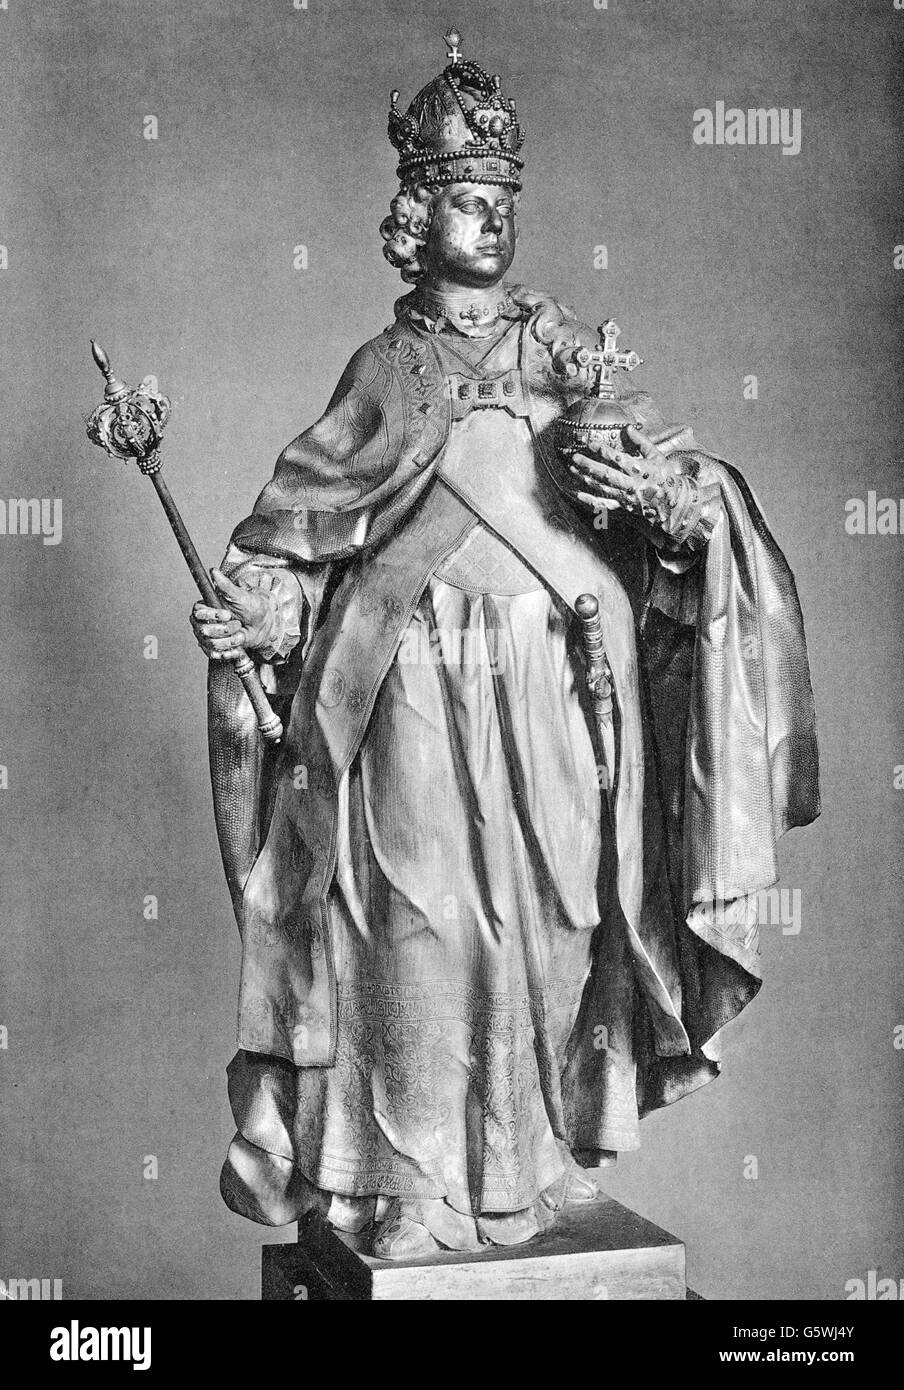 Francis I Stephen, 8.12.1708 - 18.8.1765, Holy Roman Emperor 13.9.1745 - 18.8.1765, full length, sculpture by Franz Xaver Messerschmidt, 1766, Stock Photo